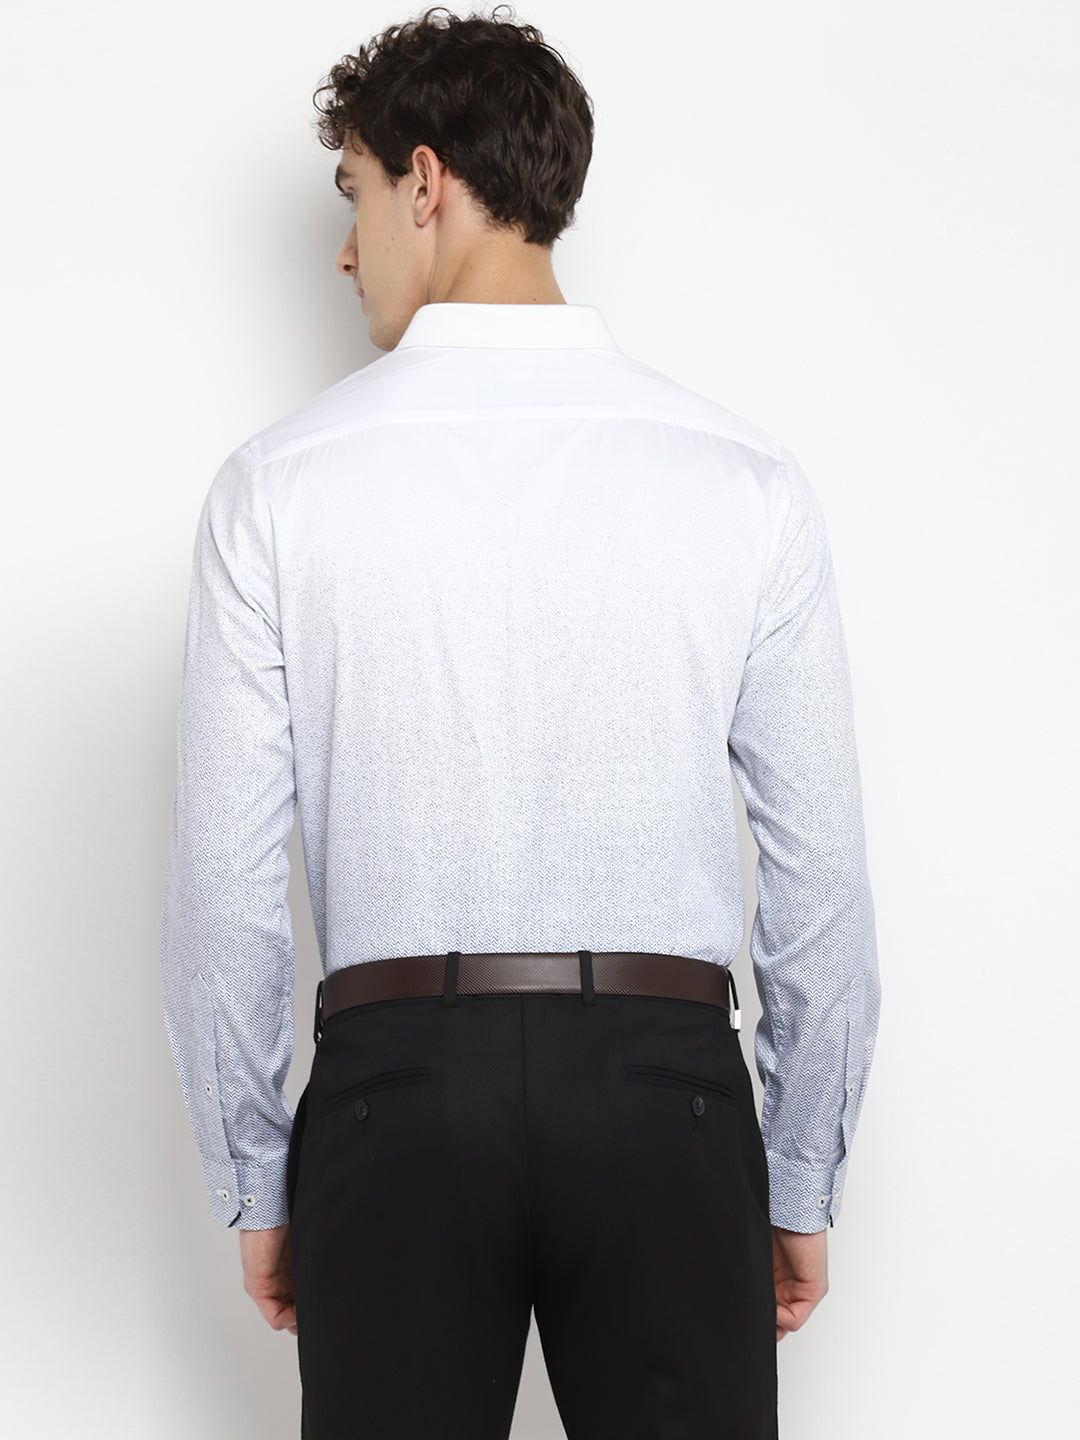 Self Design White Slim Fit Formal Shirt